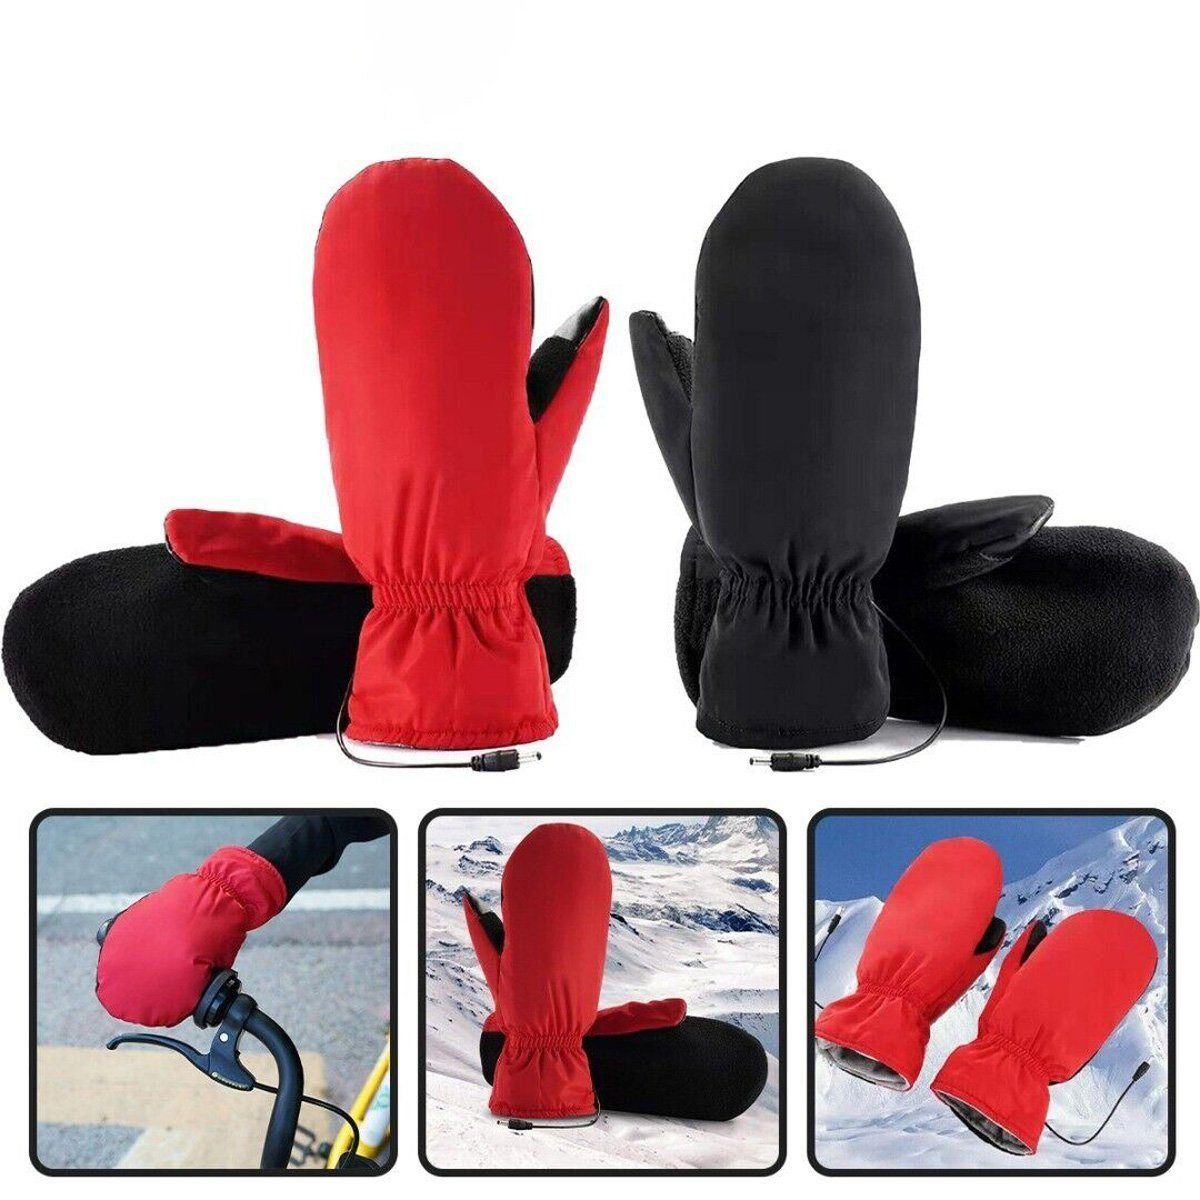 AUKUU Multisporthandschuhe Sporthandschuhe Lederhandschuhe Elektrisch rot Handschuhe beheizte